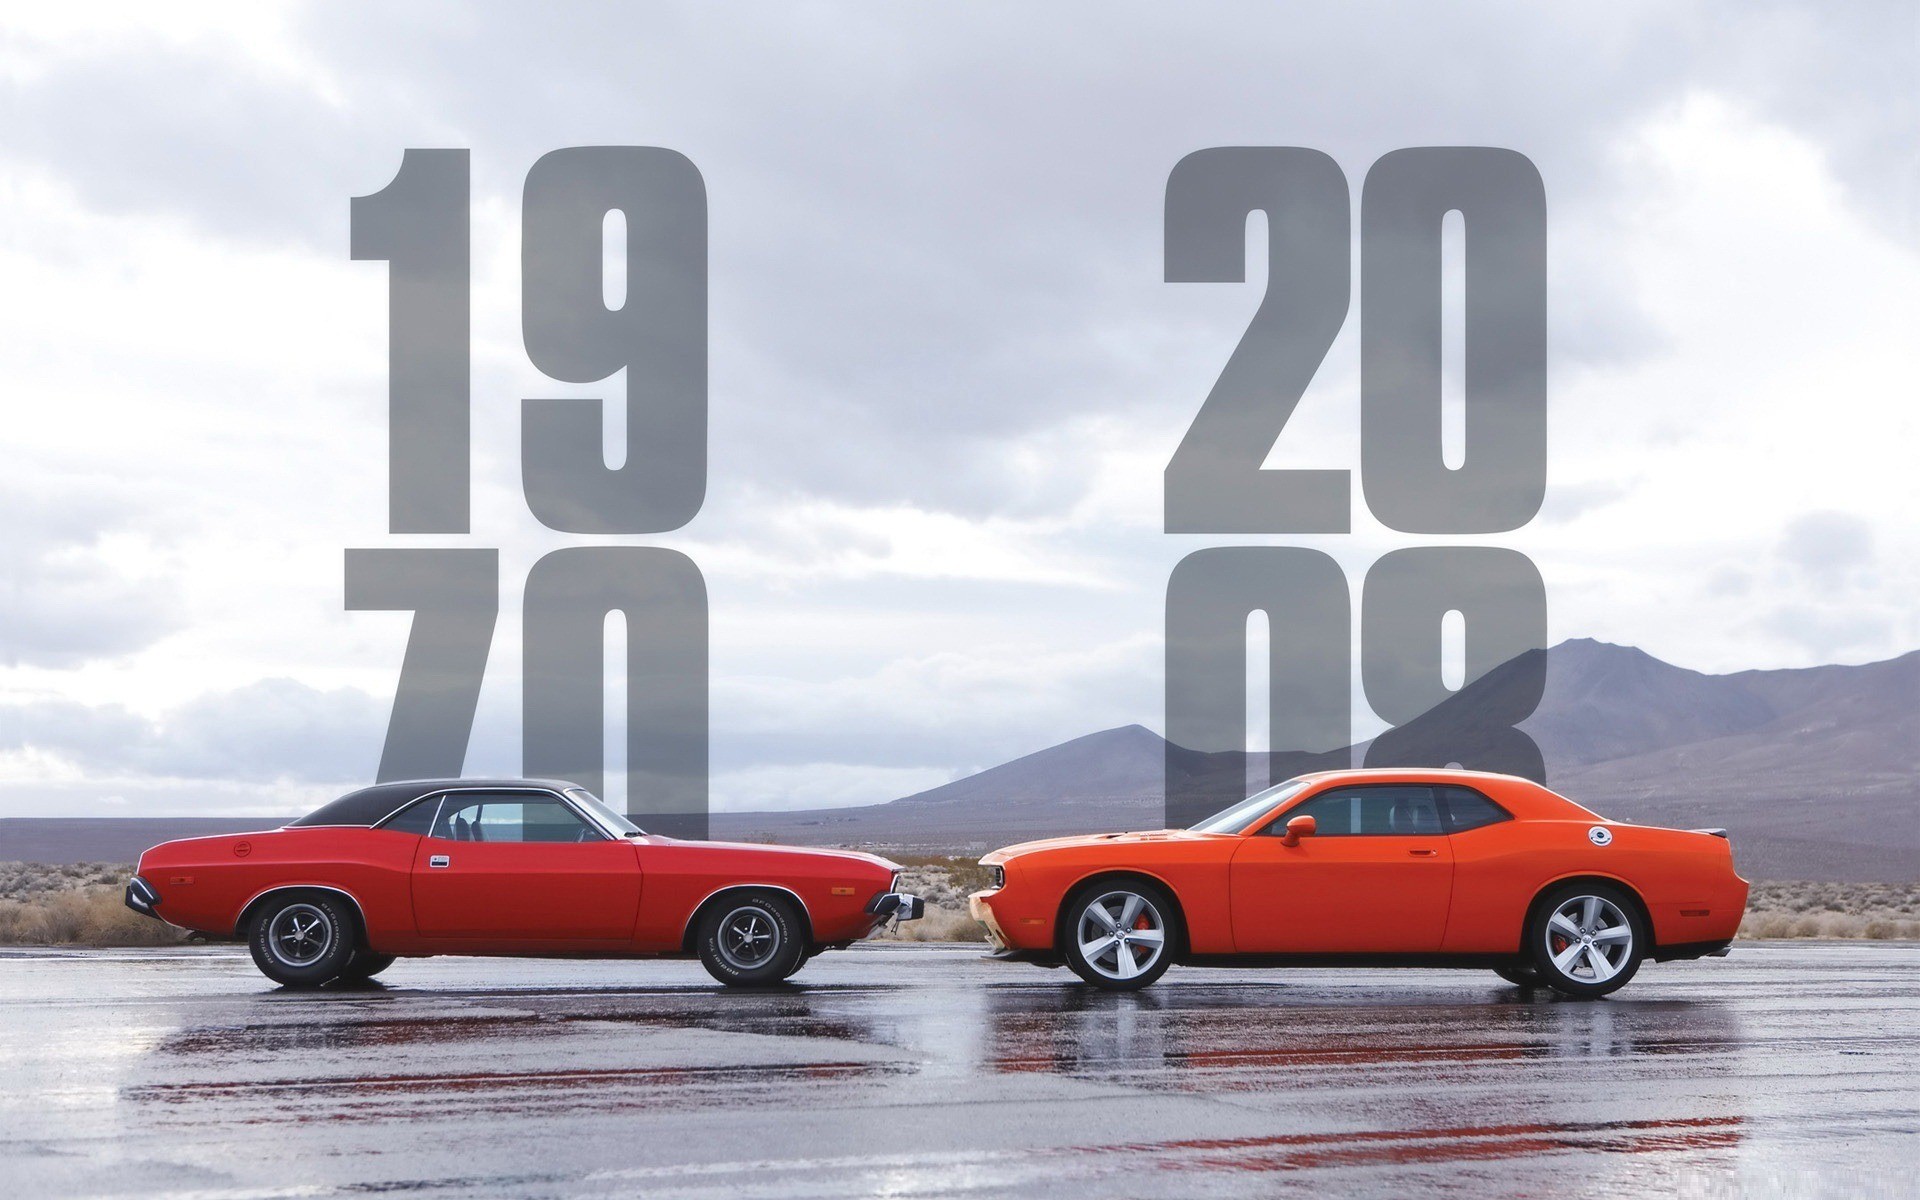 cars, 2008, Dodge Challenger, 1970 - desktop wallpaper